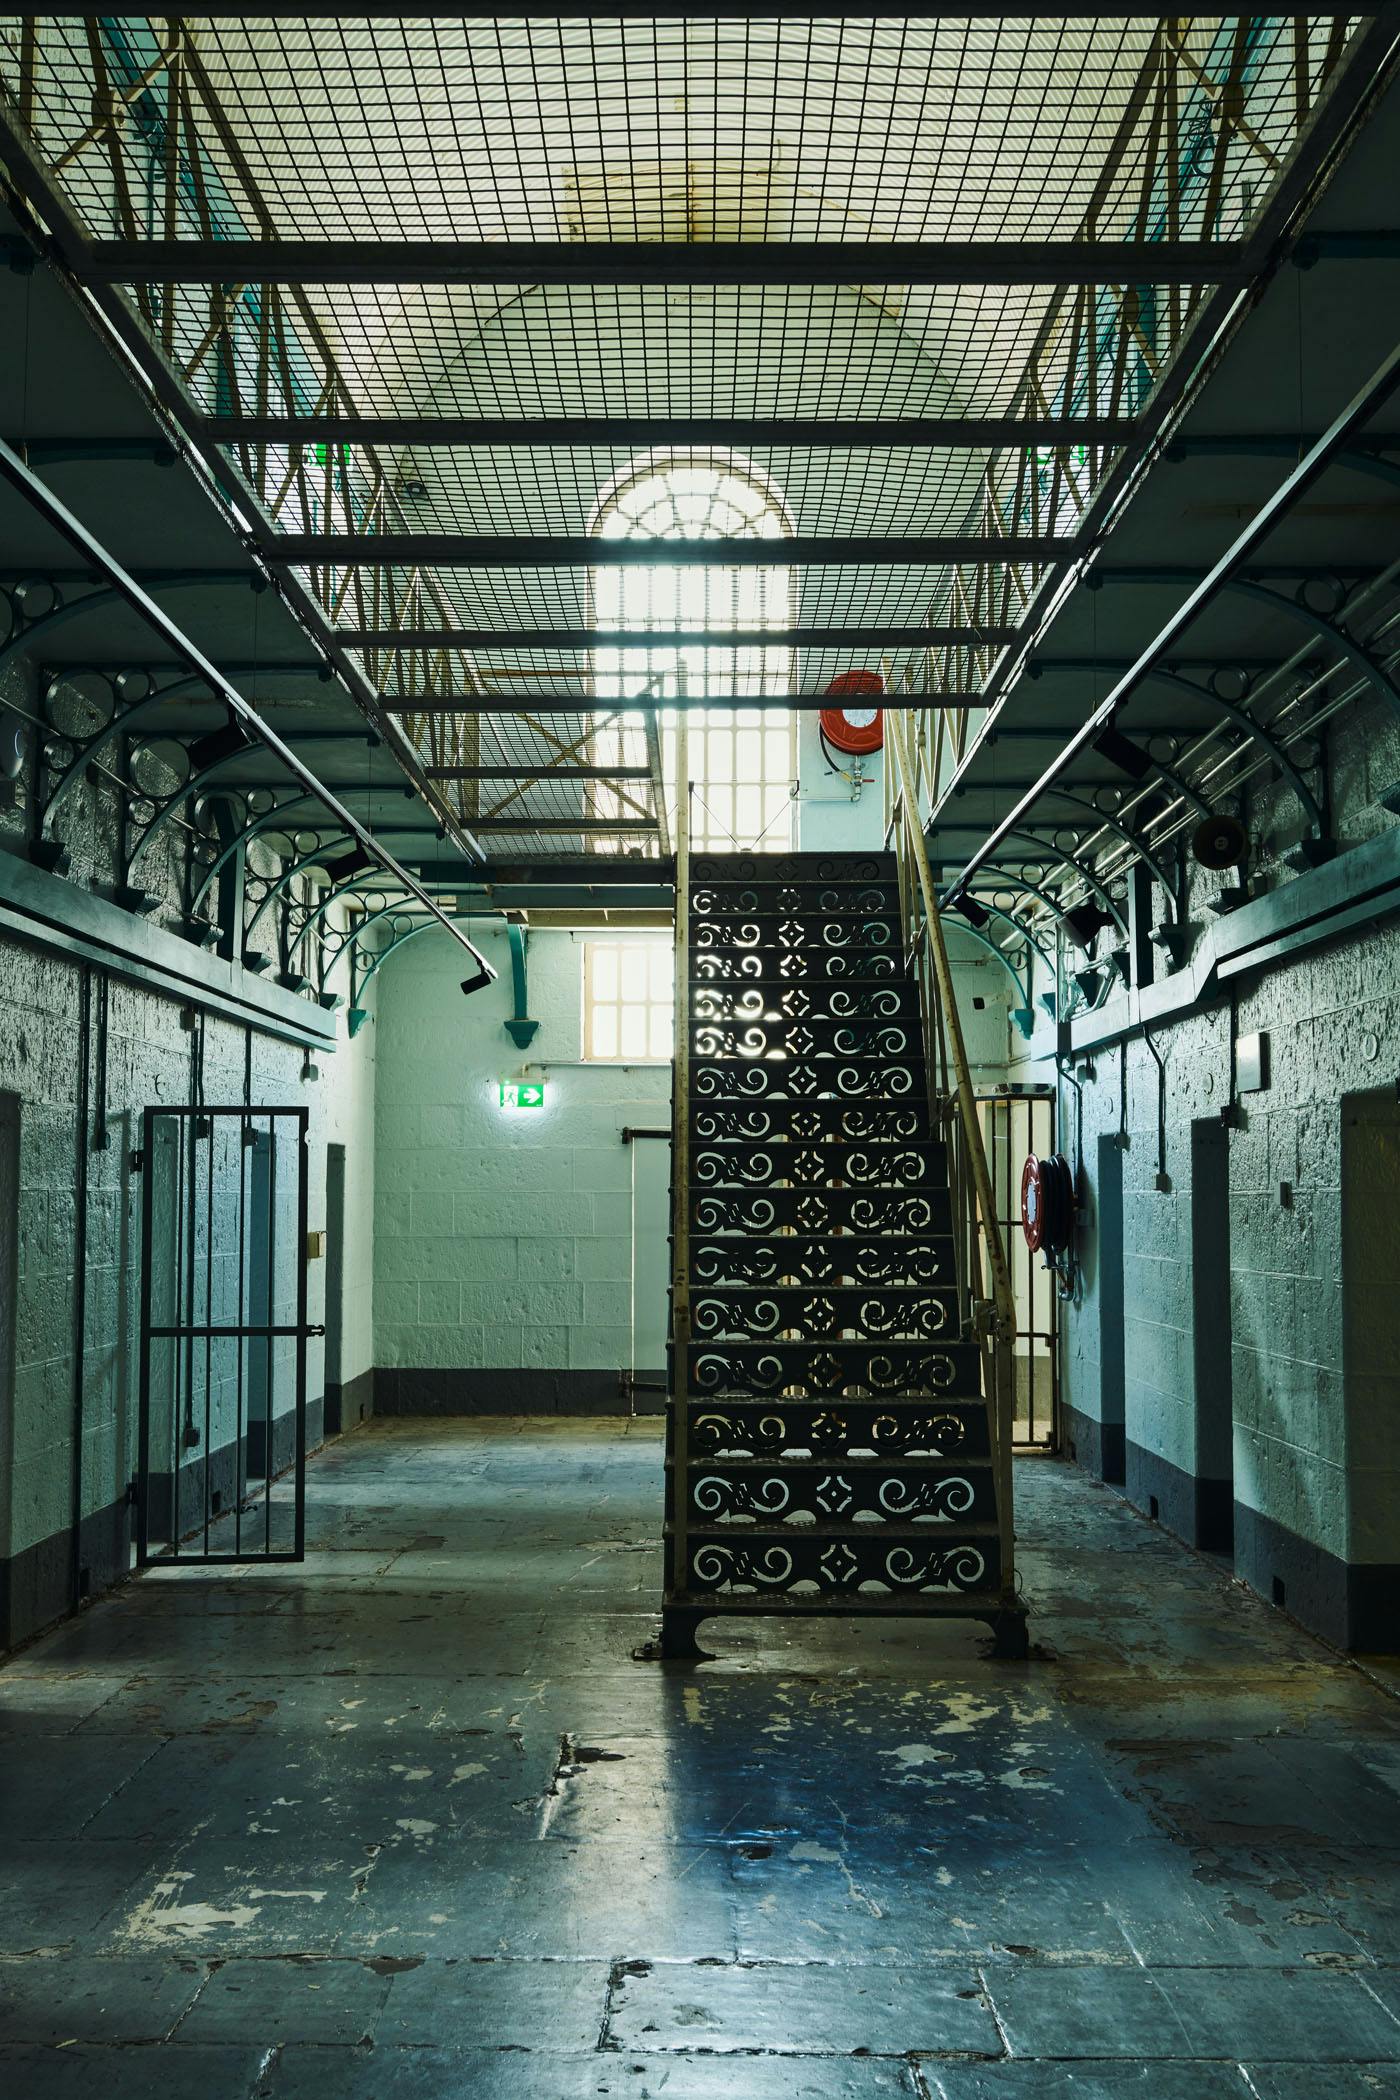 Pentridge Prison, National Trust